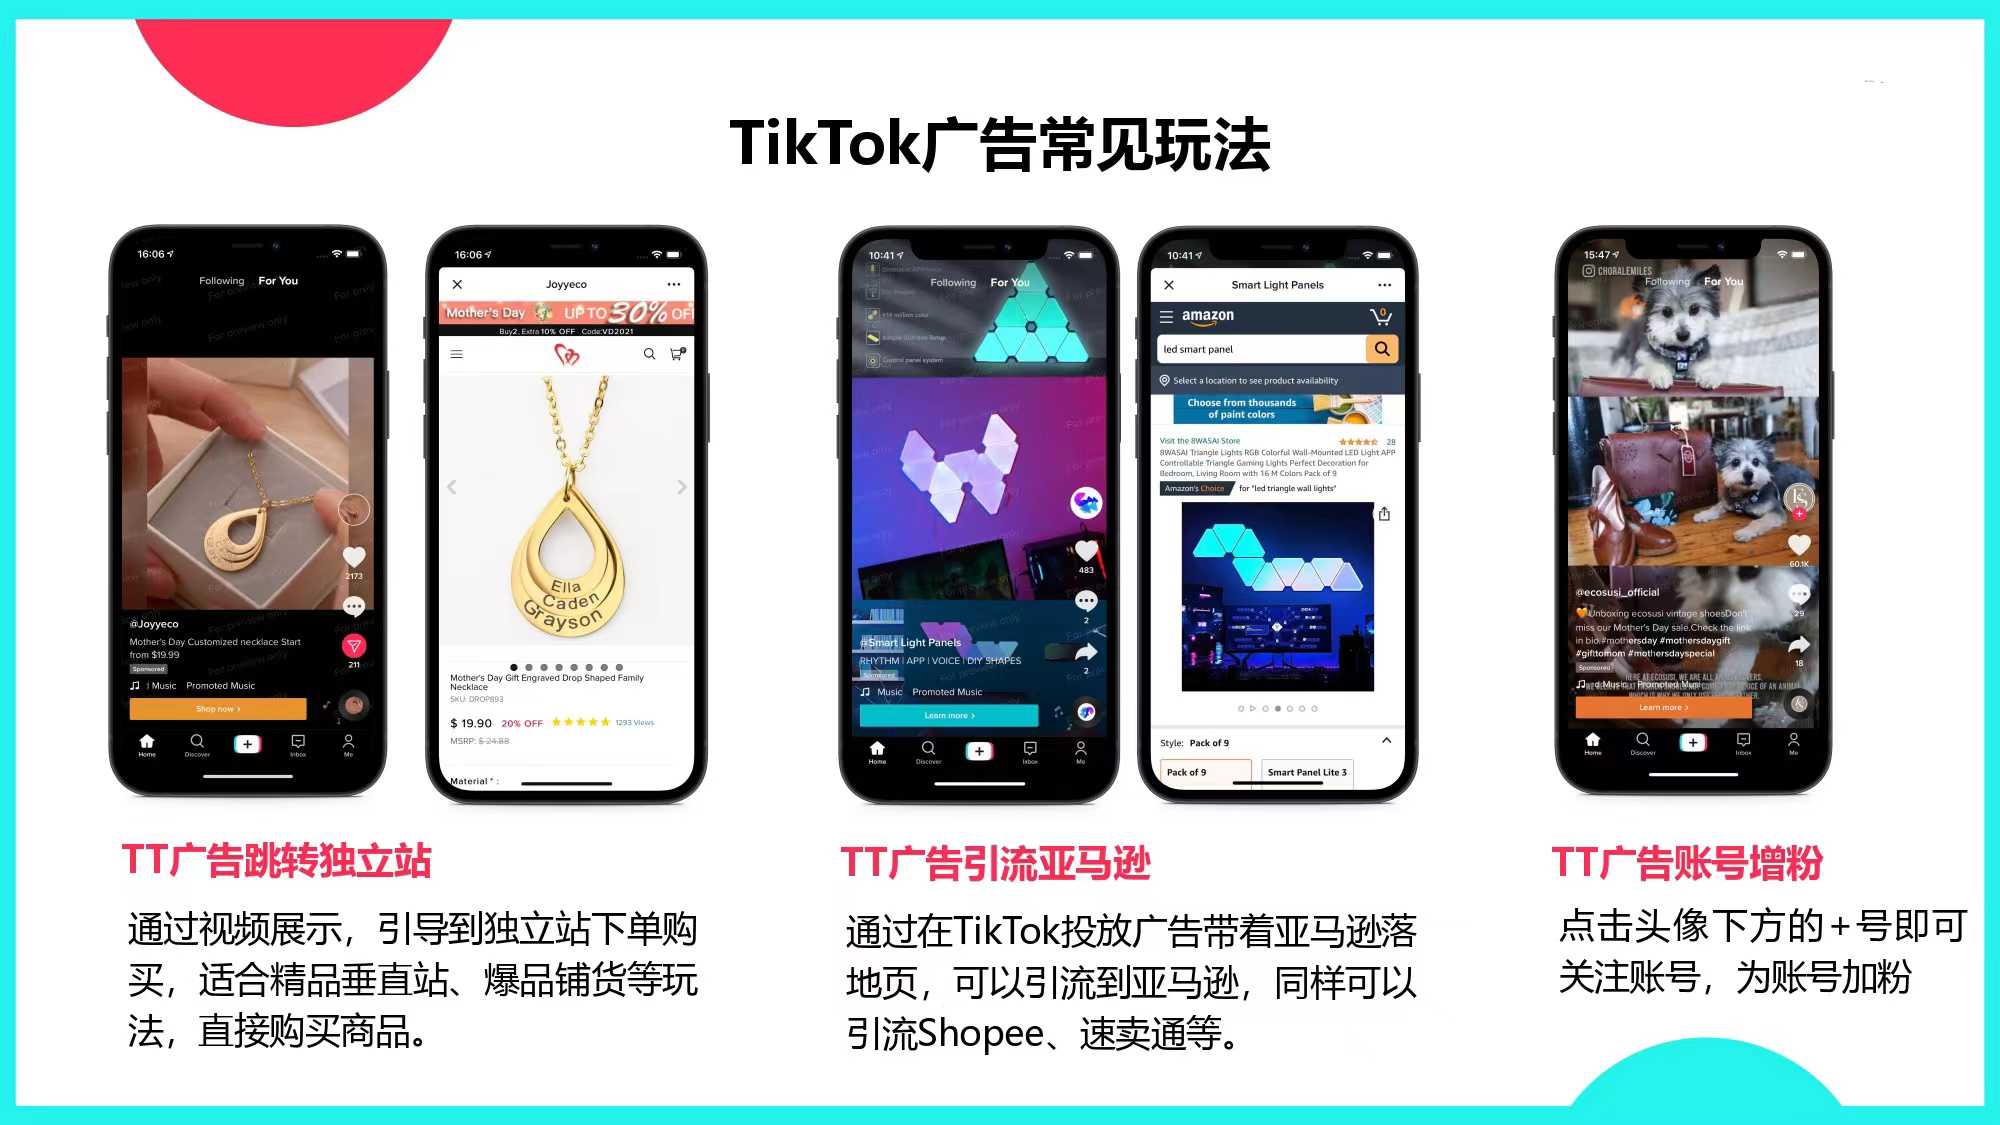 TikTok Shop热门市场品类大全